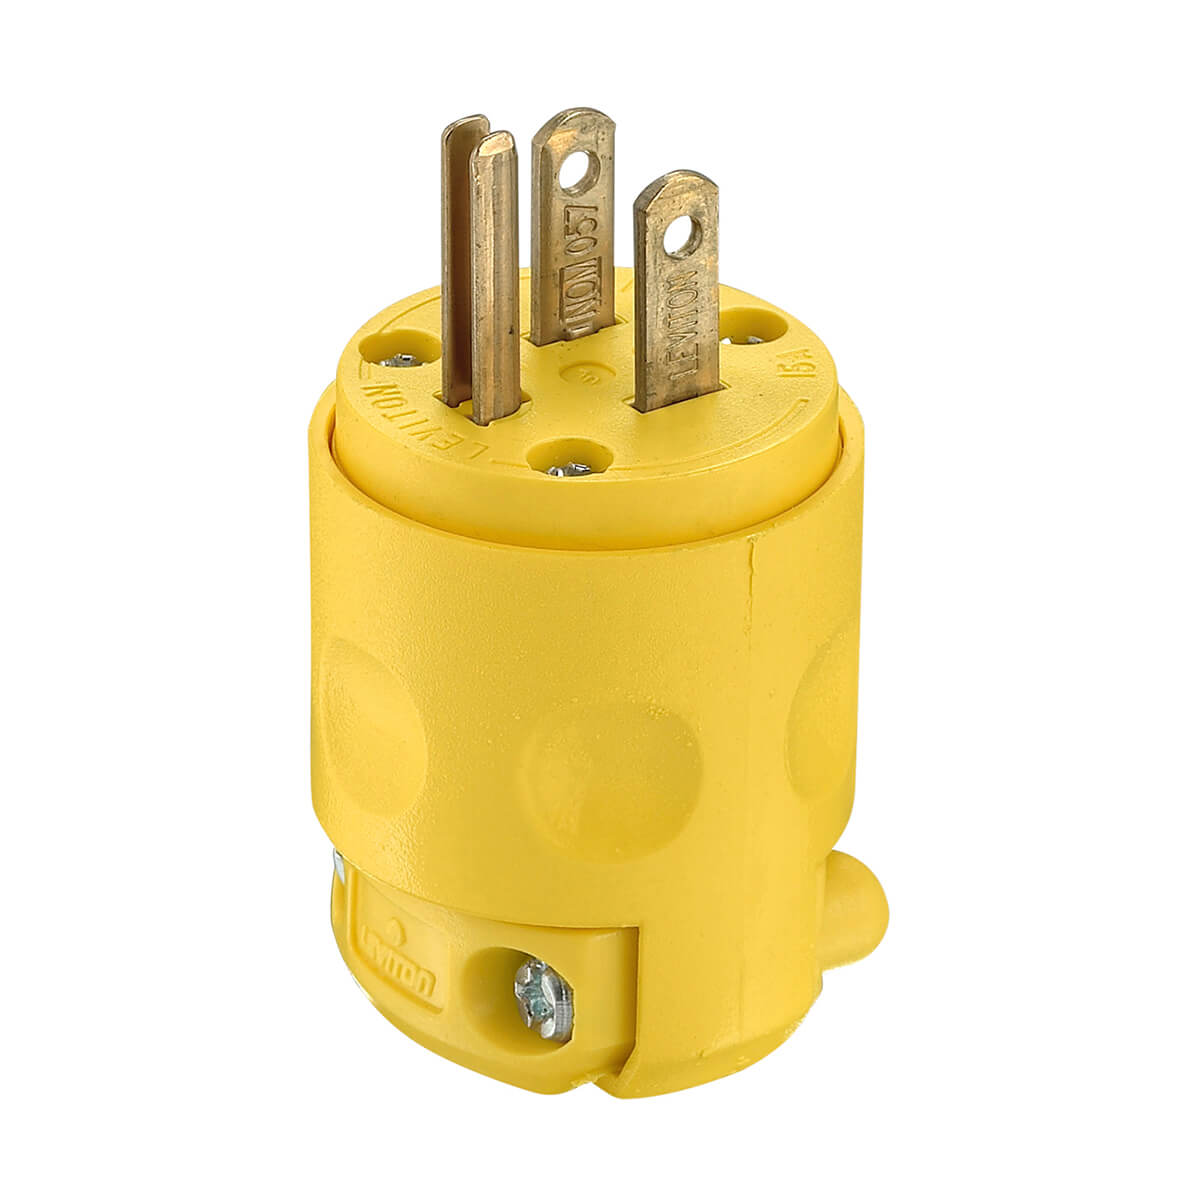 Yellow PVC Plug 2PO 3WI 15A - 125V